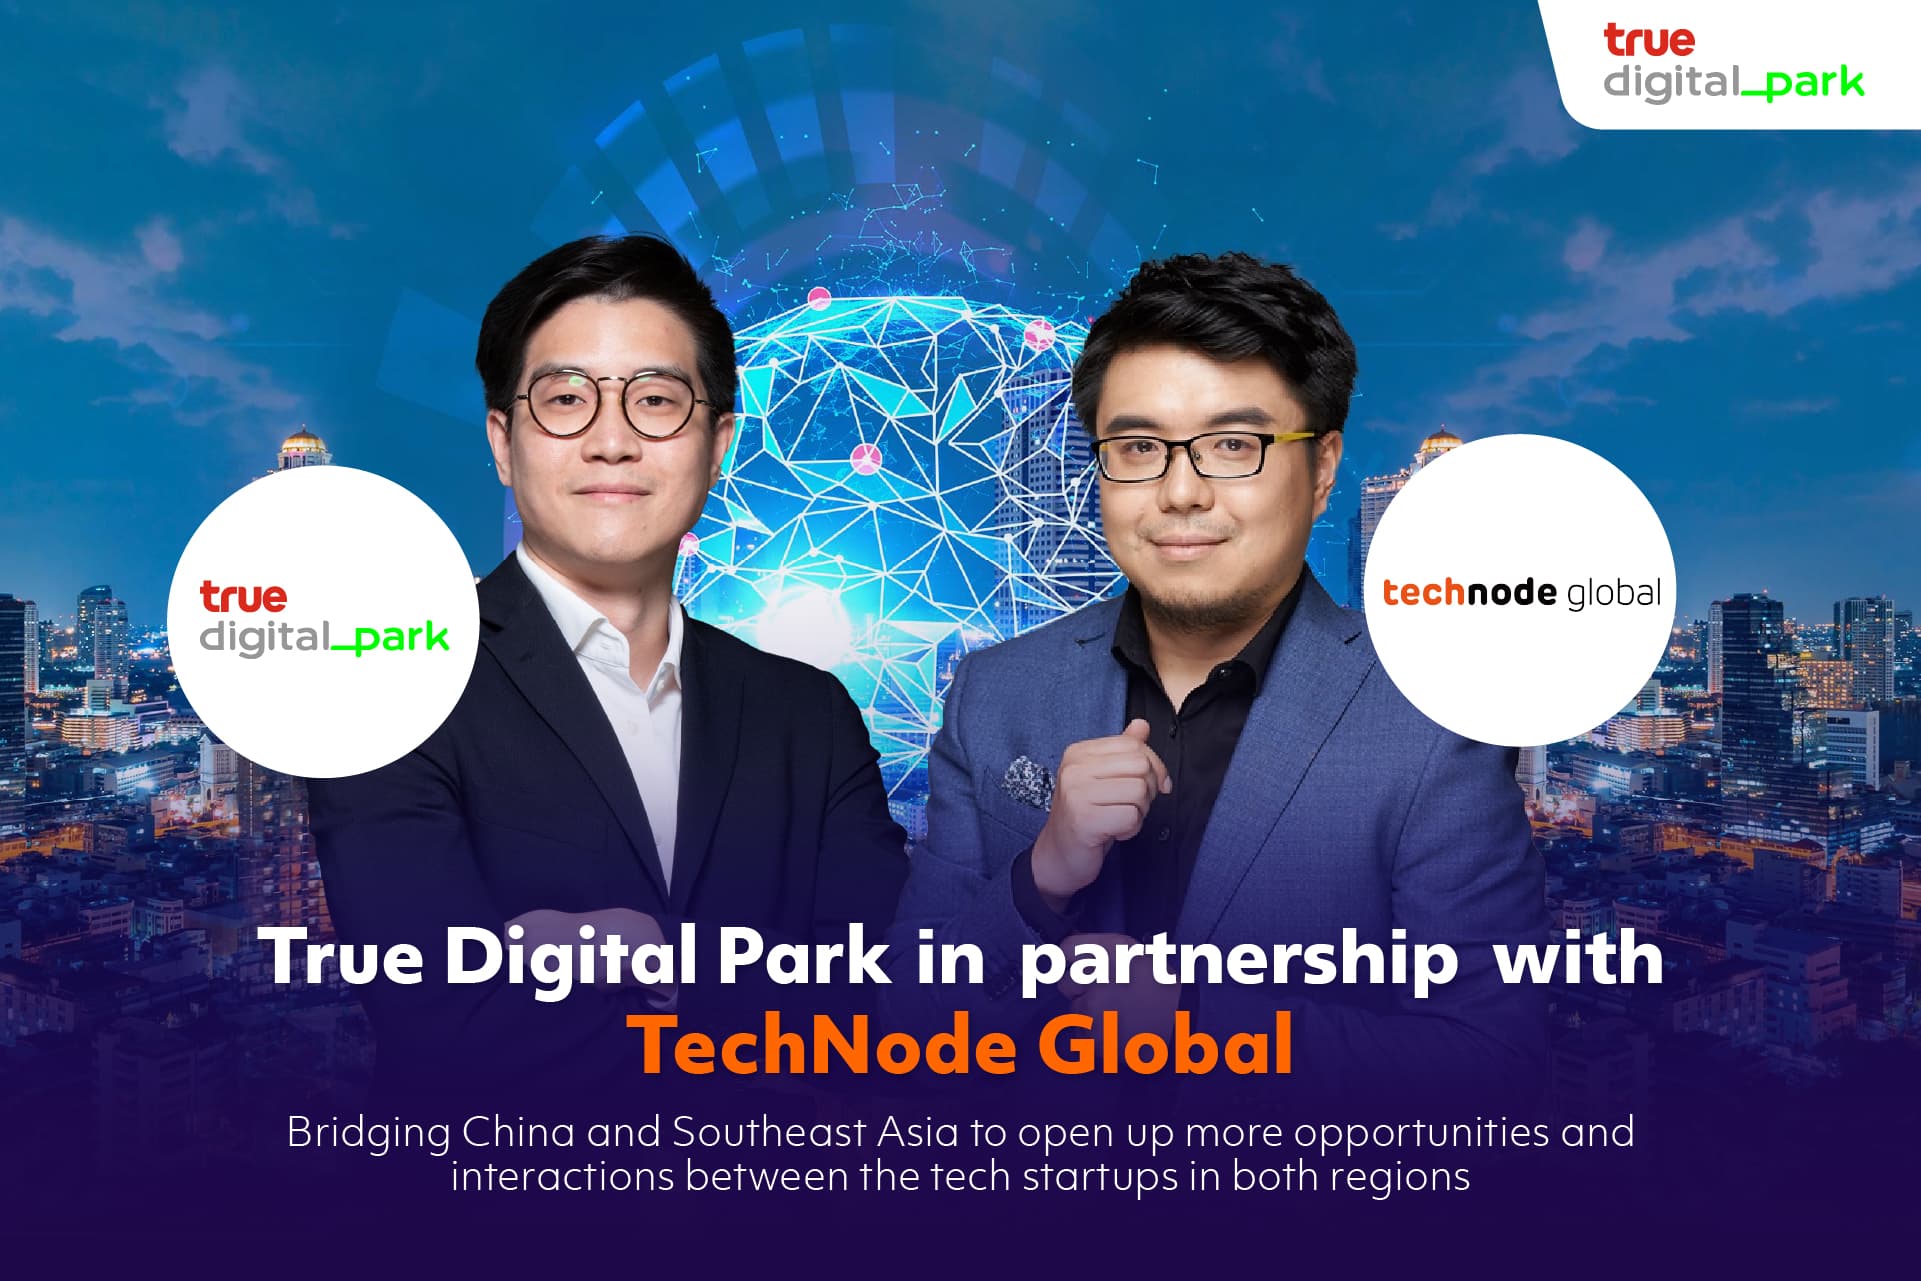 True Digital Park announces strategic partnership with TechNode Global